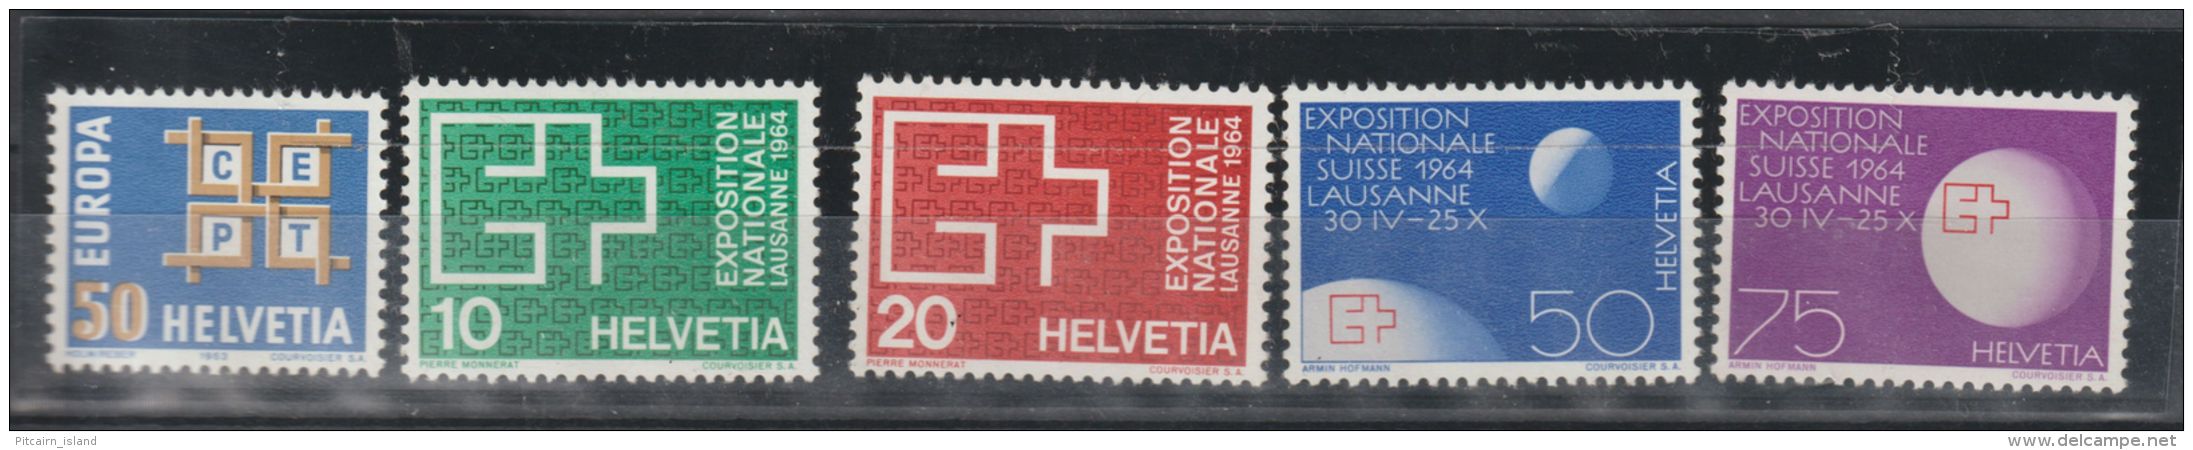 Zwitserland Swiss 1963  Mi.nr. 781-785  MLH - Unused Stamps